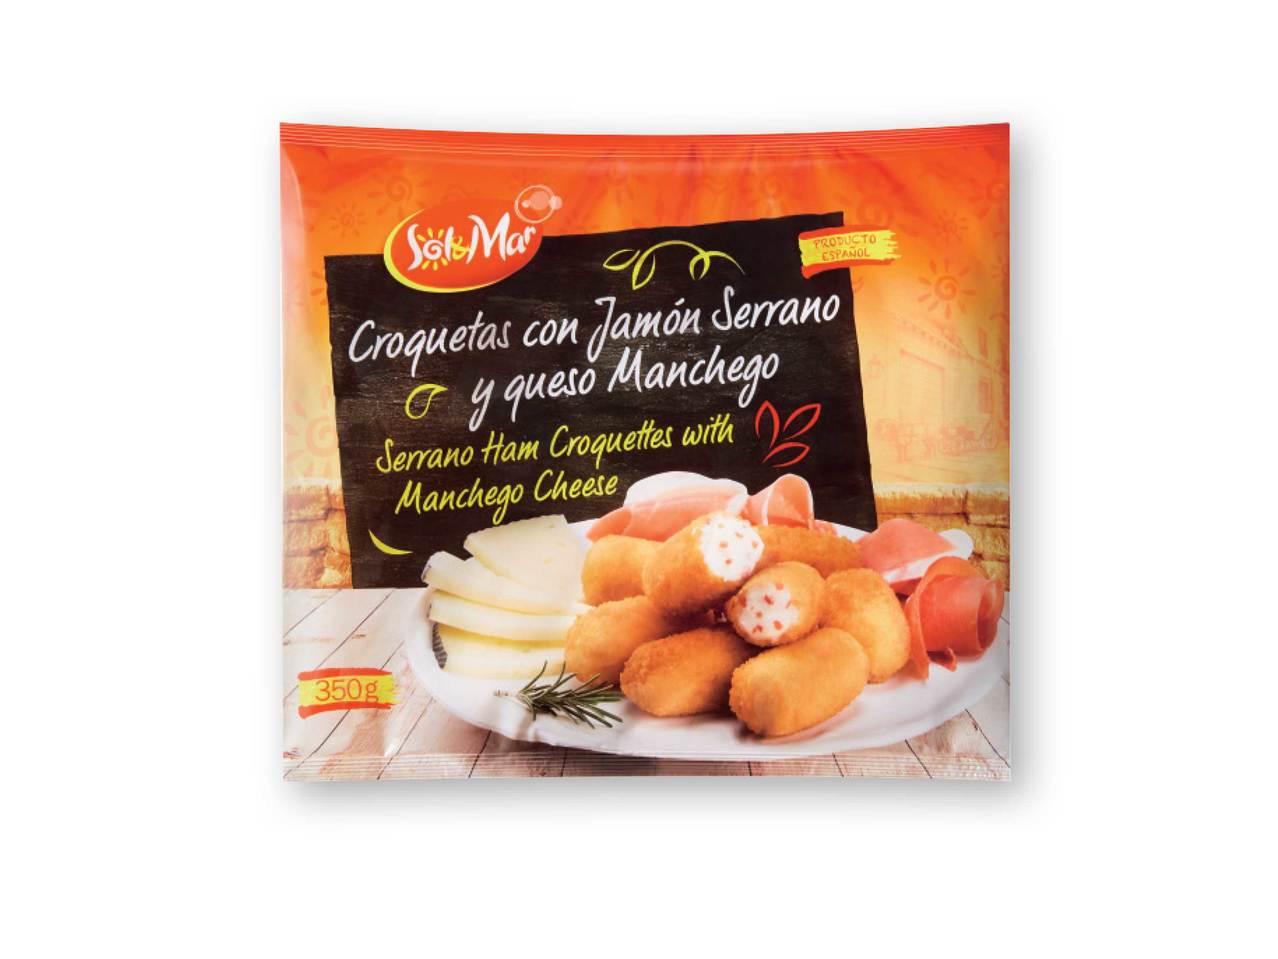 SOL & MAR(R) Serrano Ham Croquettes with Manchego Cheese